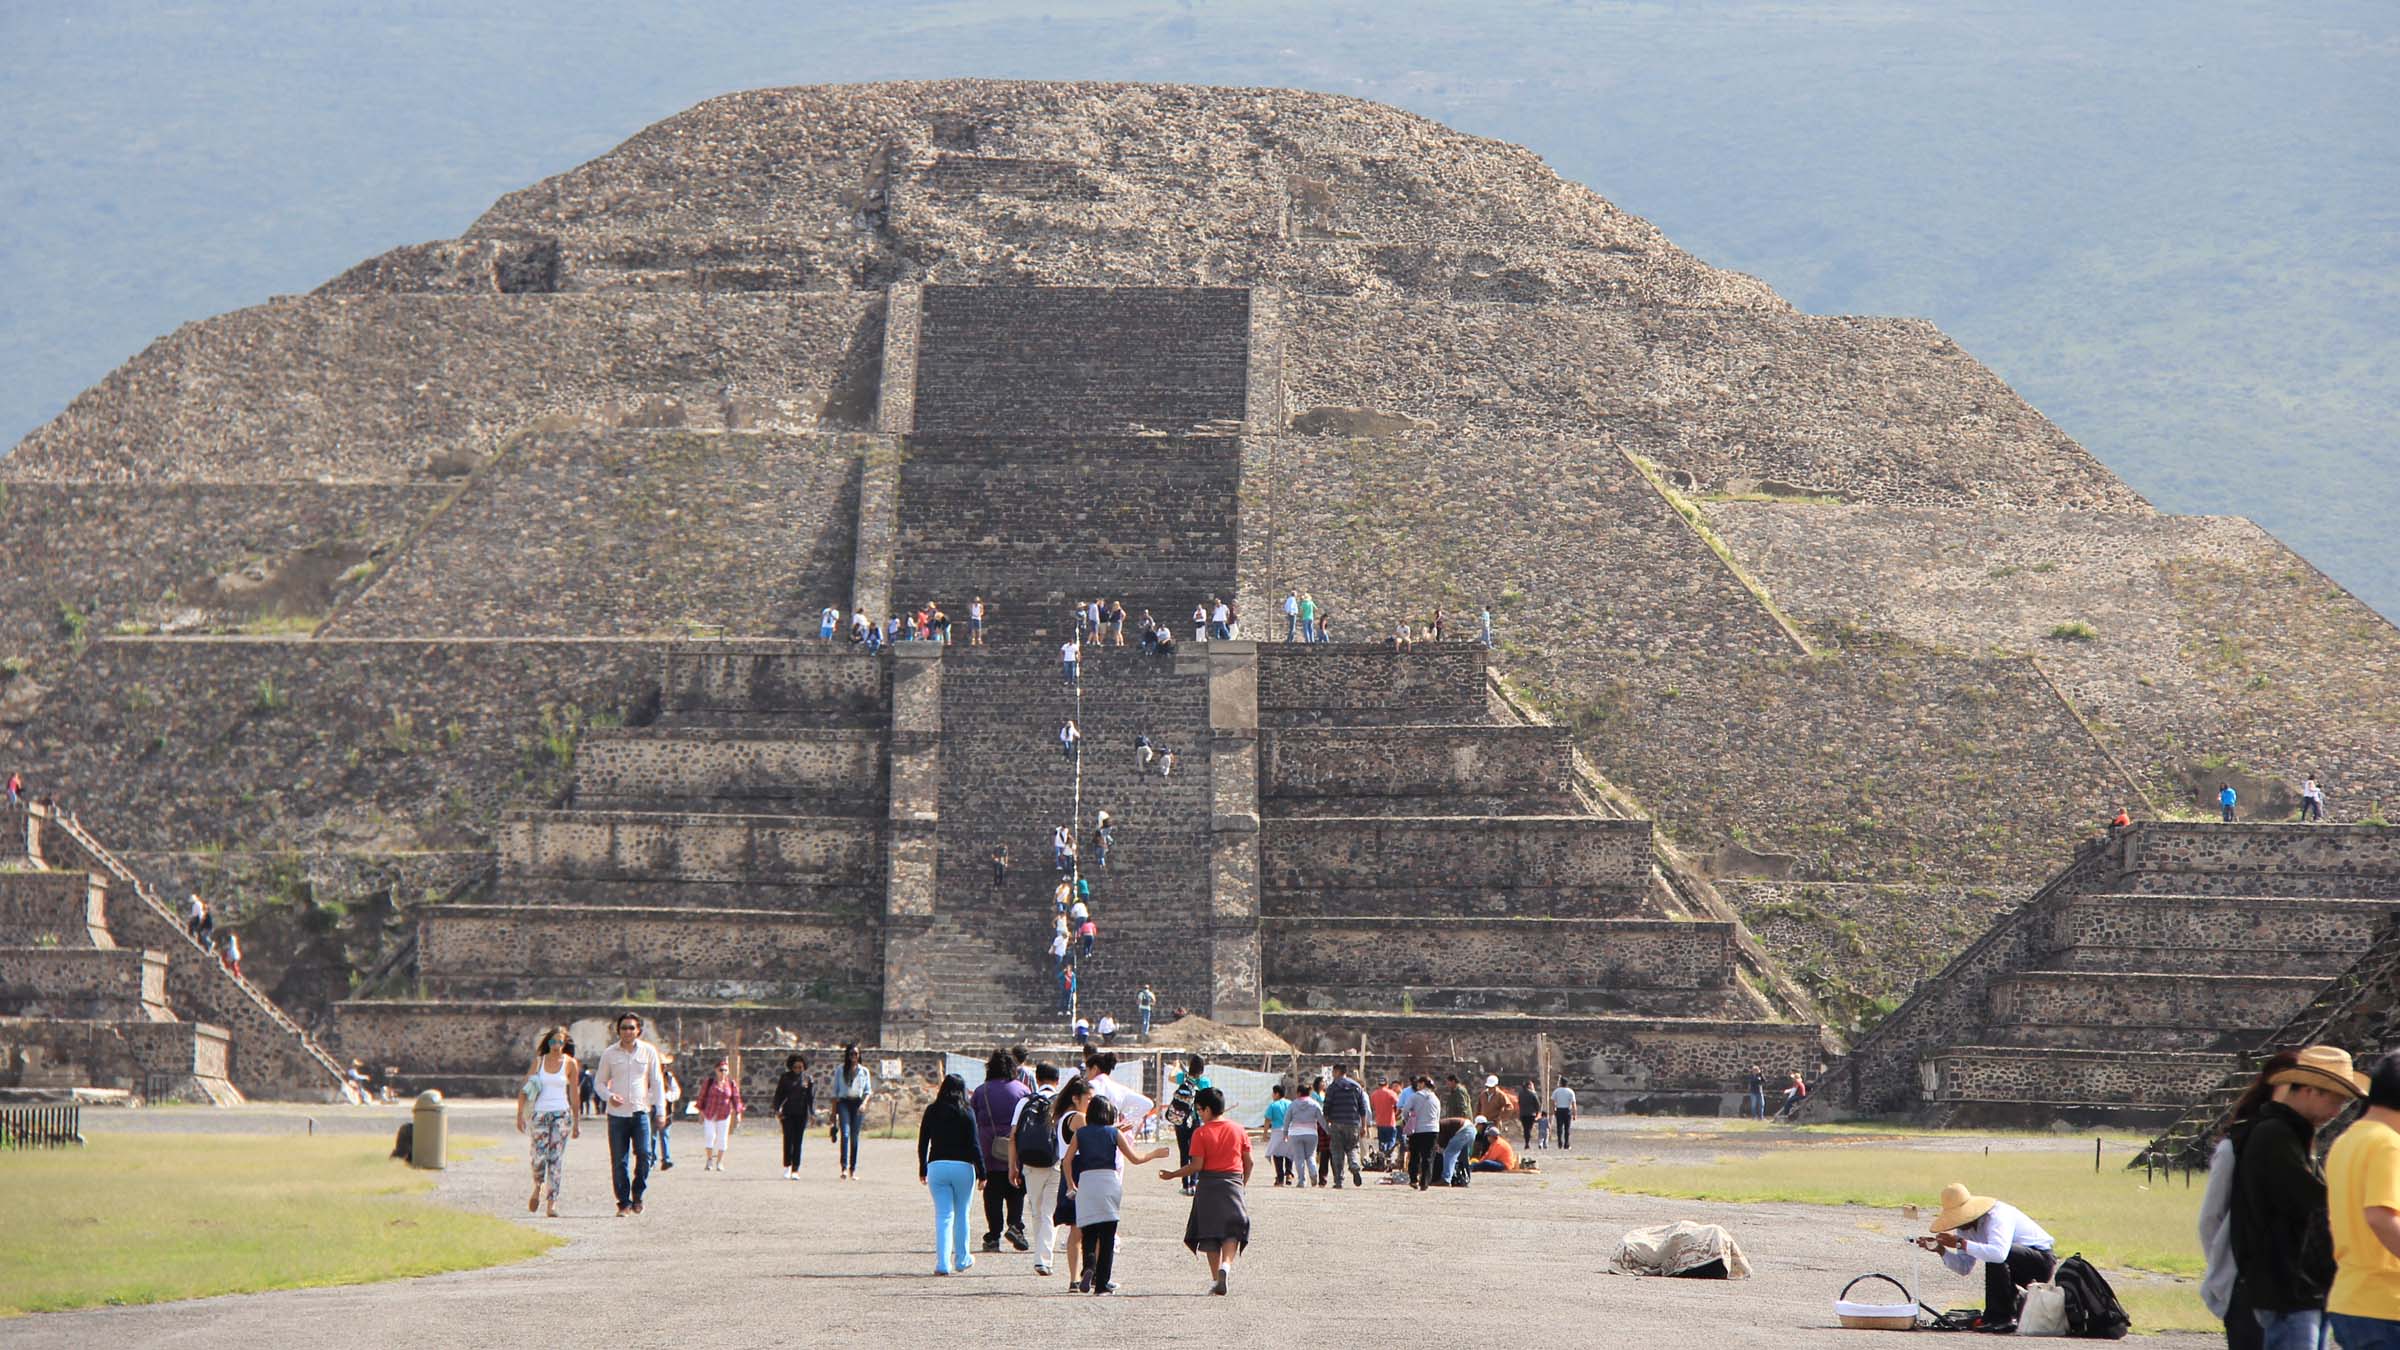 teotihuacan express tour